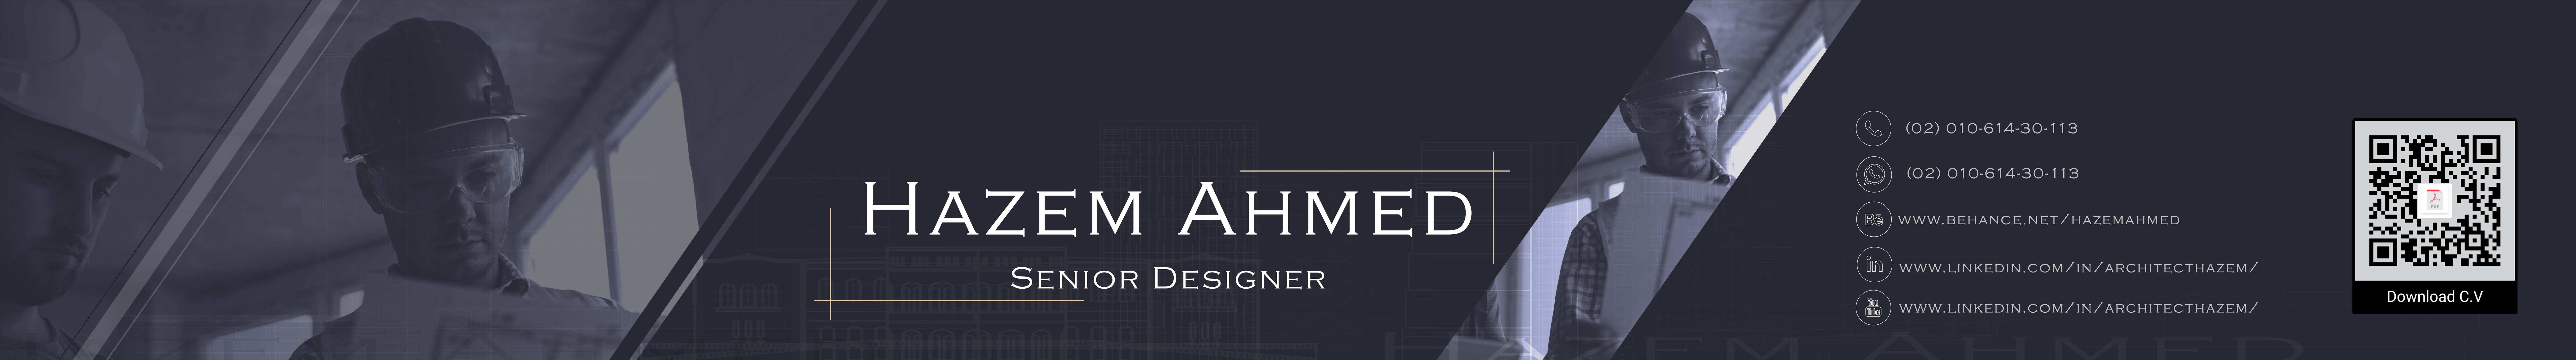 Hazem Ahmed's profile banner